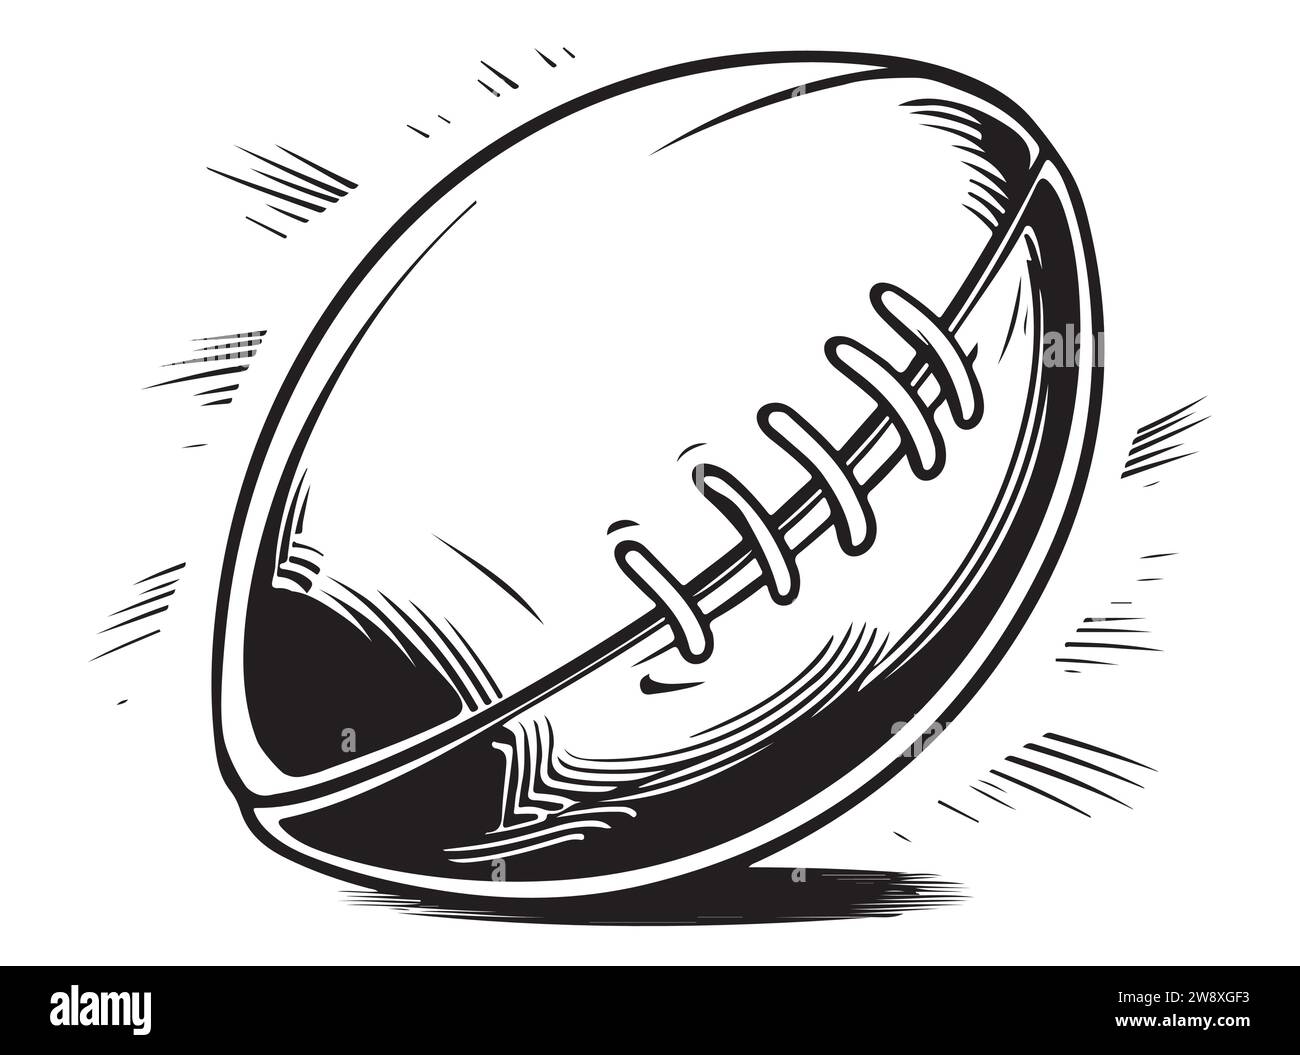 Retro Rugby Ball Vector Stock Illustration Stock Vector